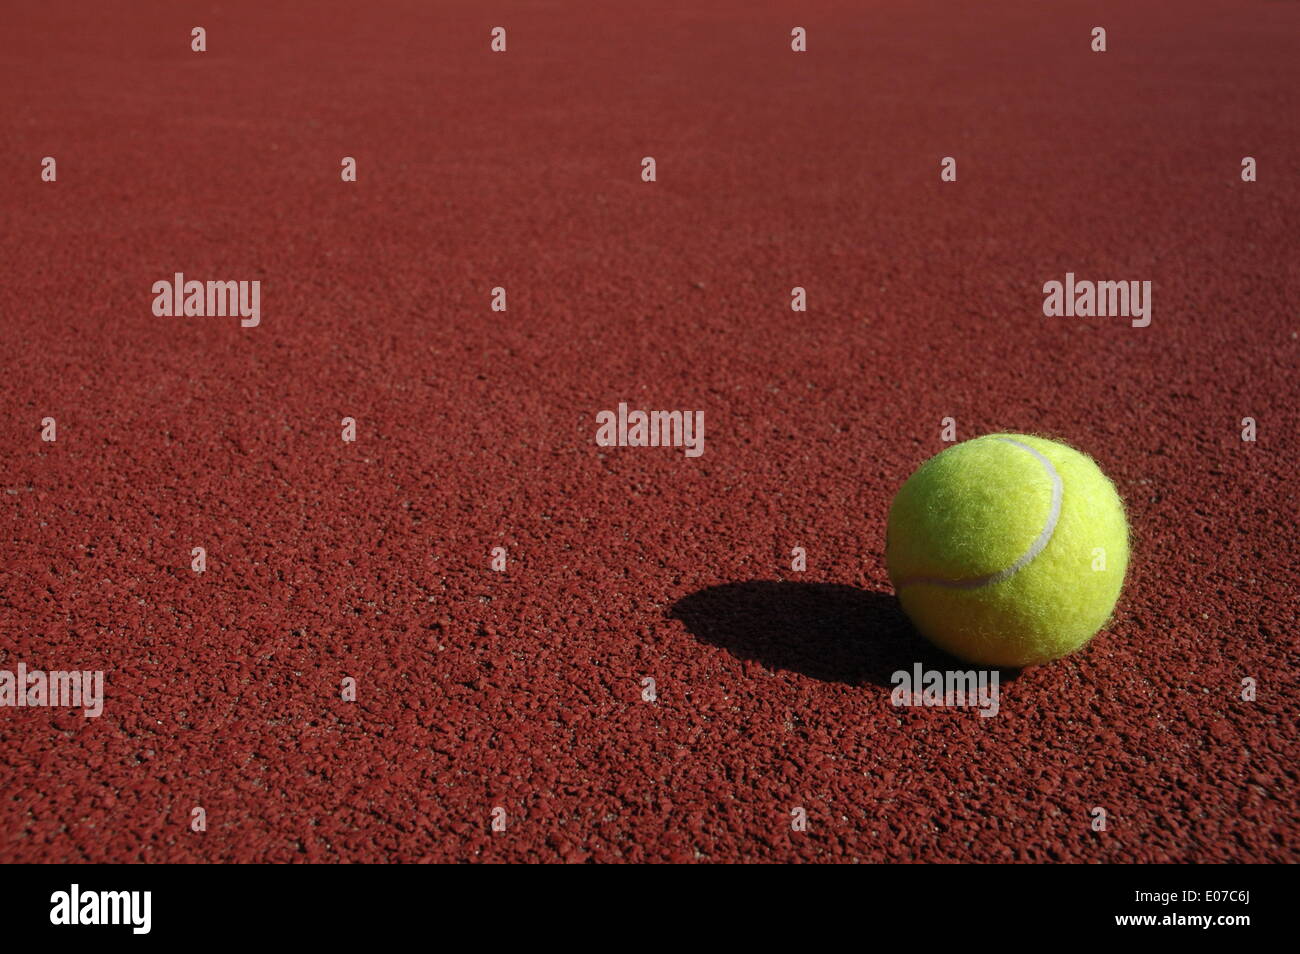 Illustration - A tennis ball sits on the red court in Germany, 17 September 2009. Fotoarchiv für ZeitgeschichteS. Steinach - NO WIRE SERVICE Stock Photo